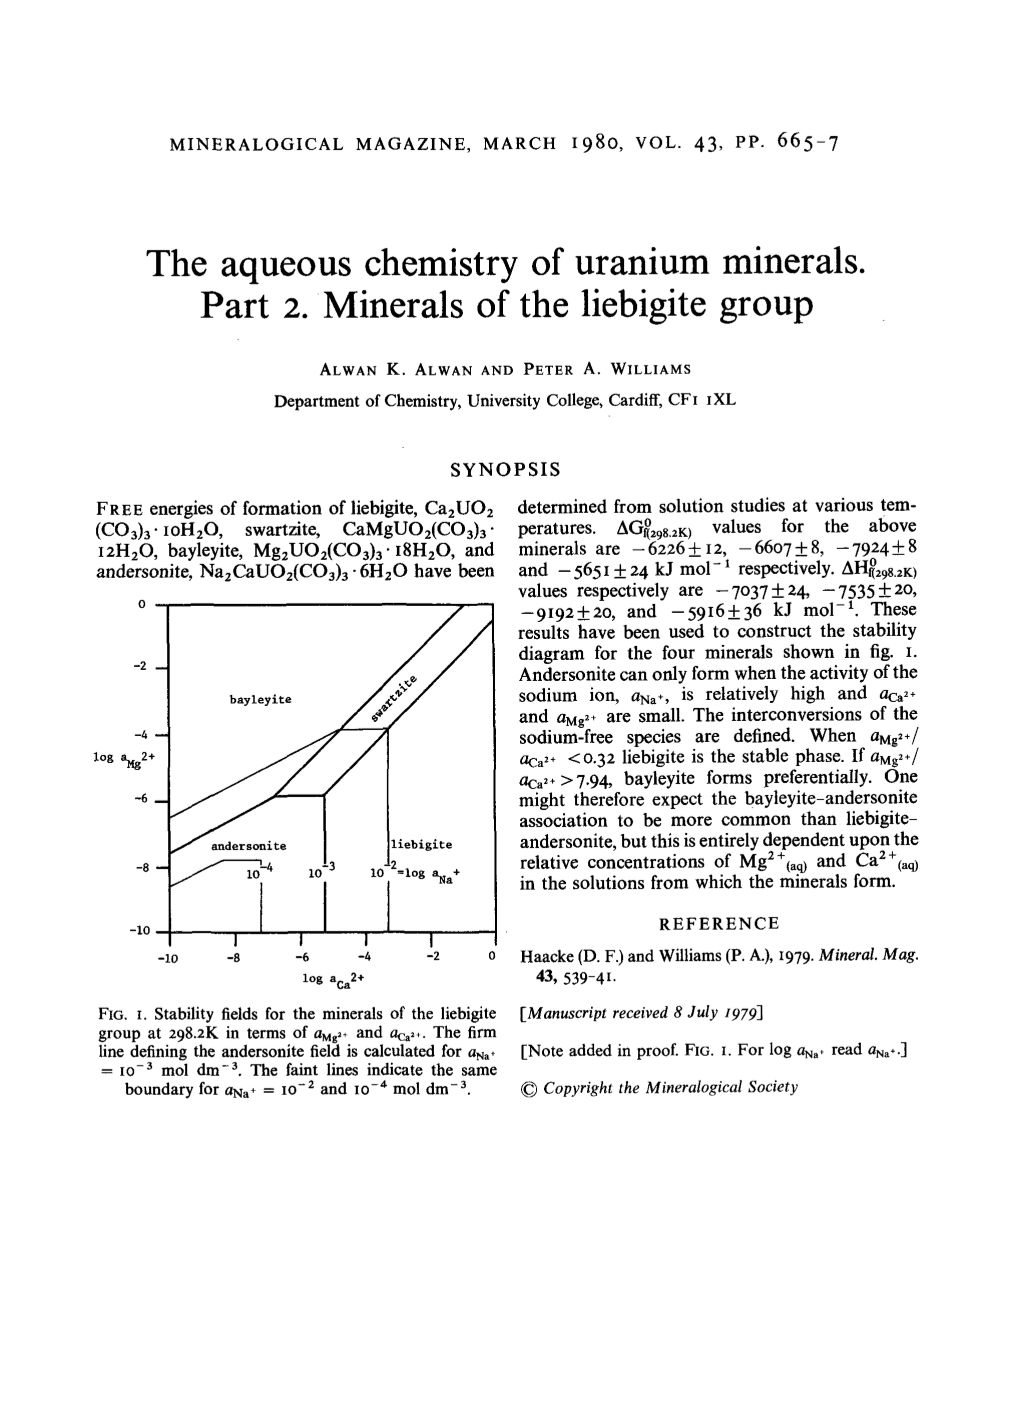 The Aqueous Chemistry of Uranium Minerals. Part 2. Minerals of the Liebigite Group